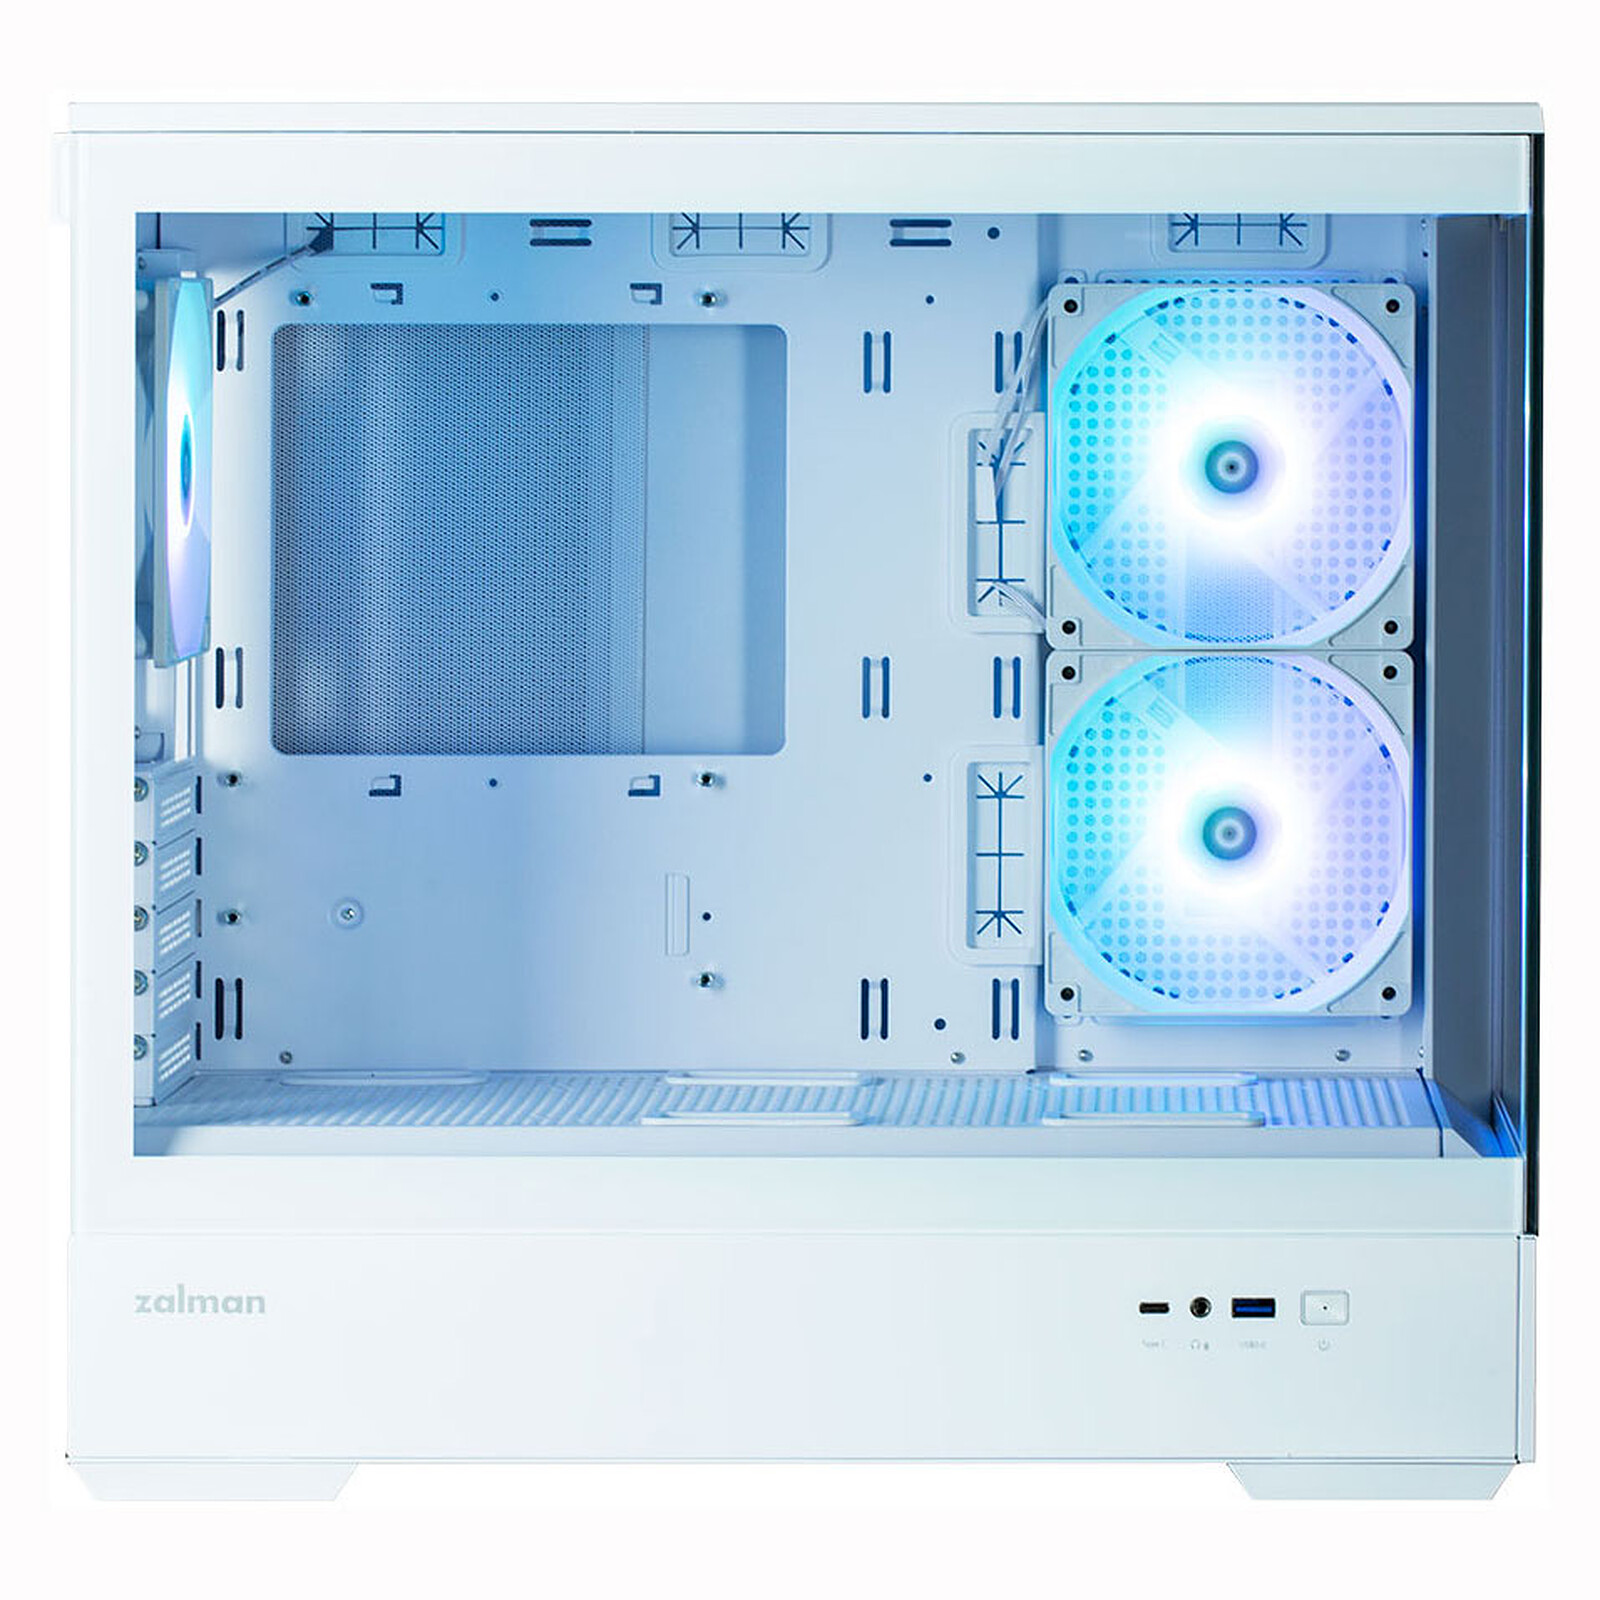 Hyte Y60 (Snow white) - Boîtier PC - Garantie 3 ans LDLC